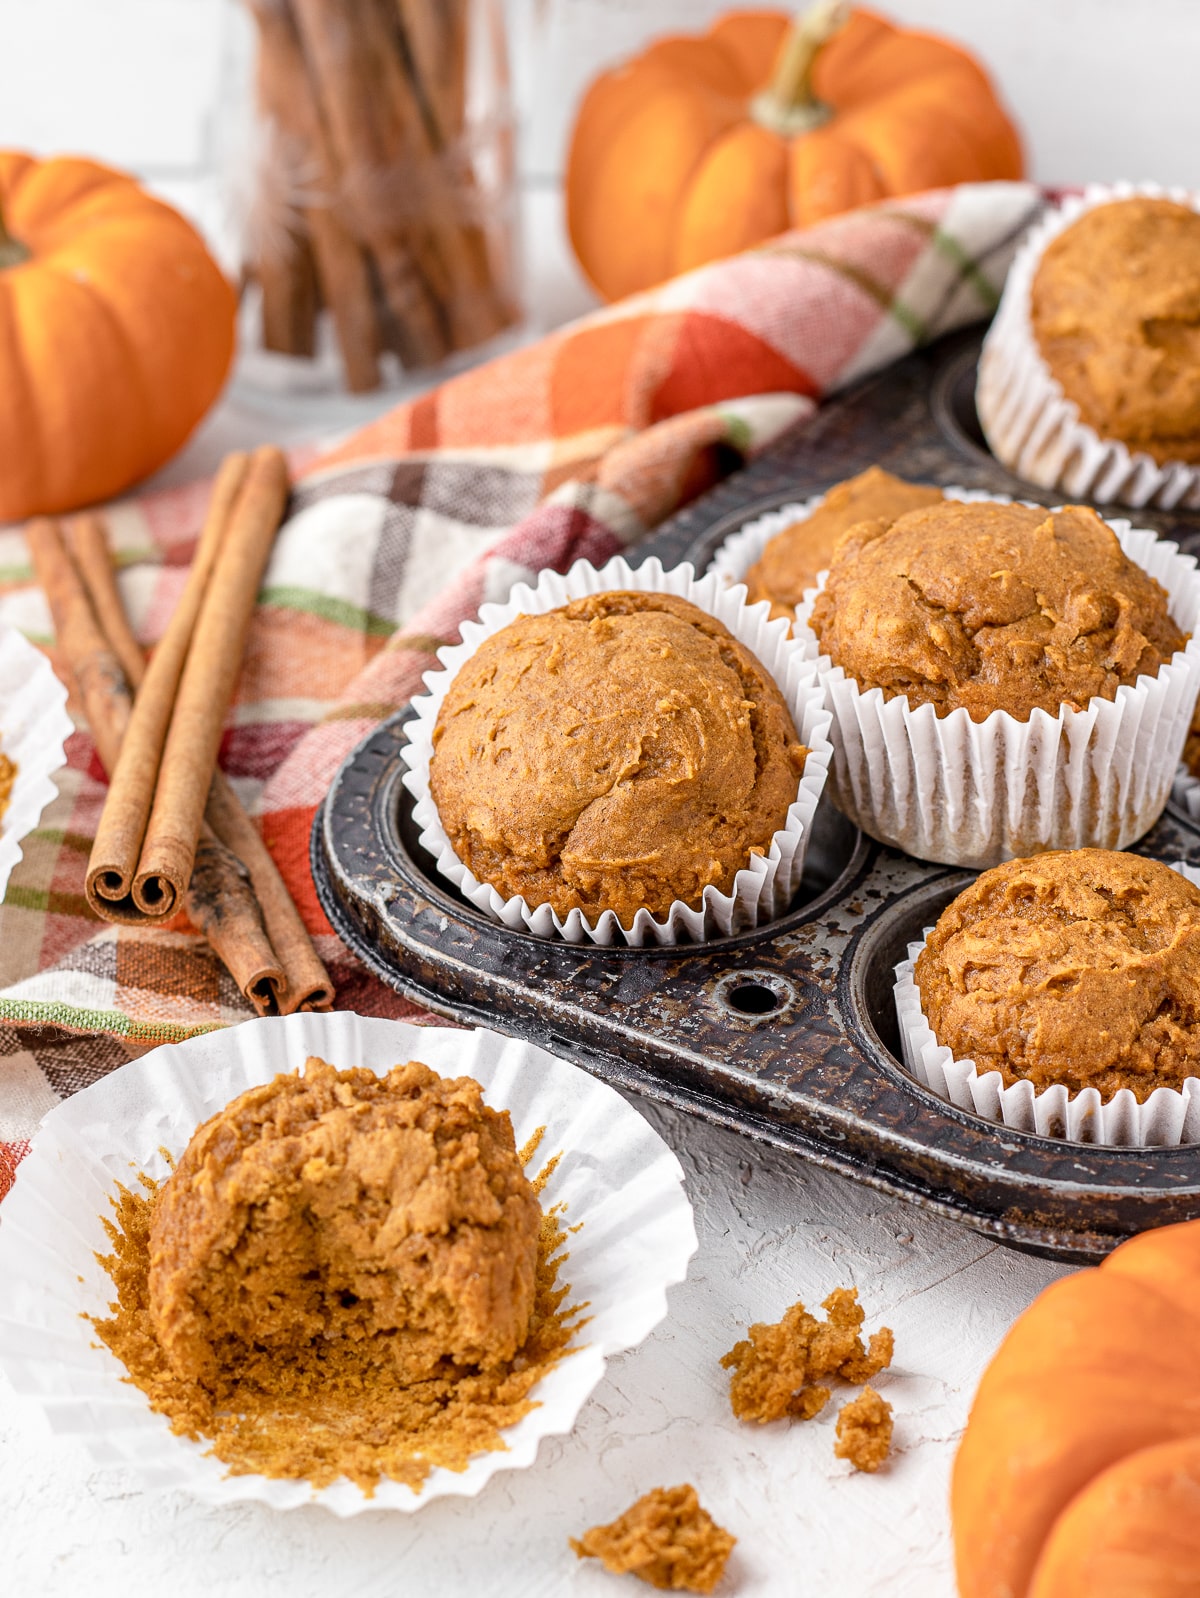 Pumpkin muffins surrounded by mini pumpkins, cinnamon sticks, and half eaten muffins.